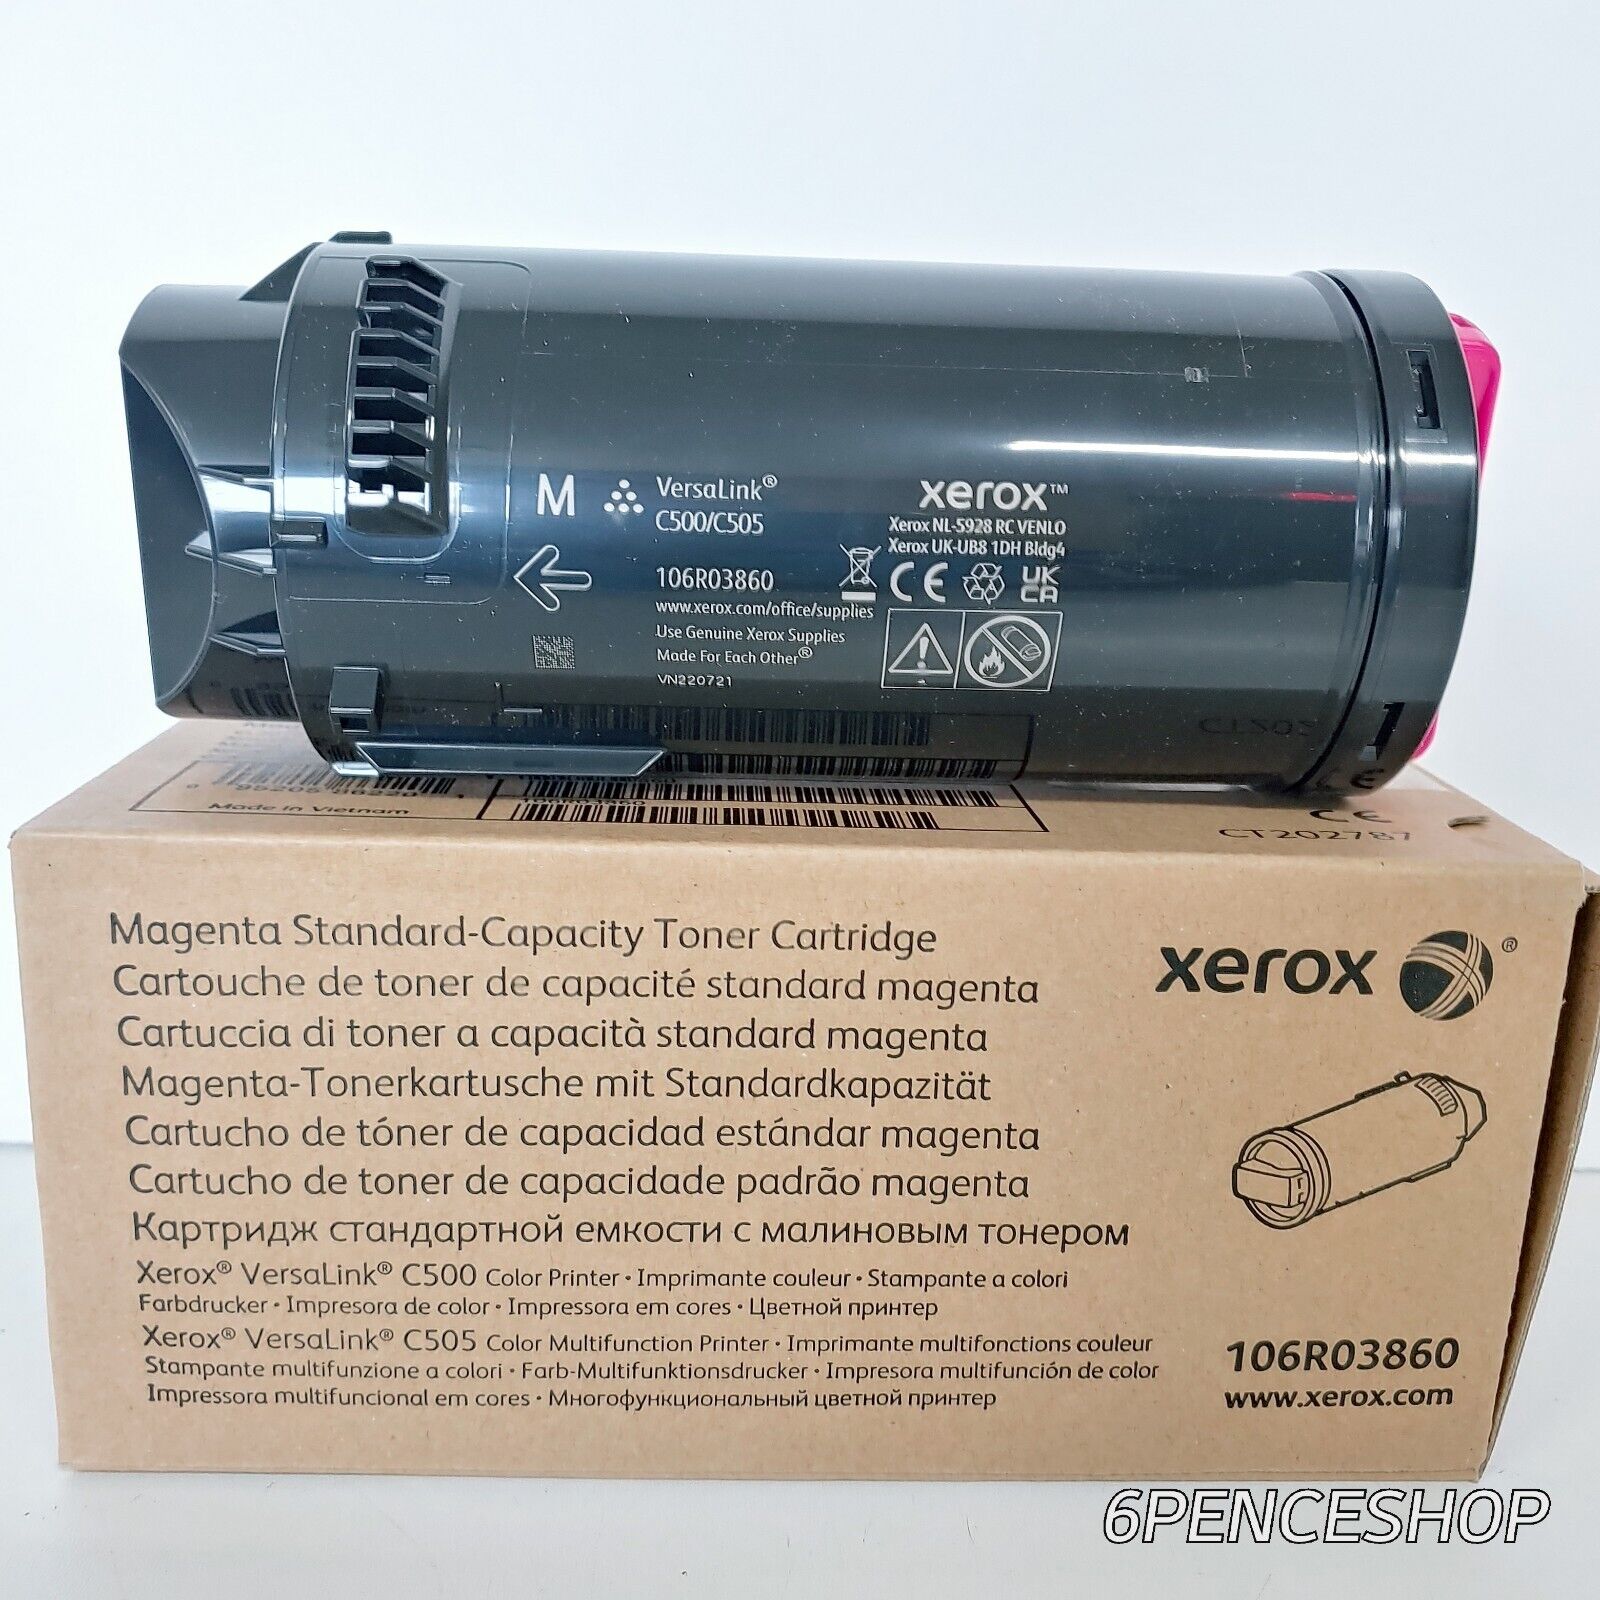 OB *Components are Clean* XEROX Geniune 106R03860 Magenta Toner Cartridge